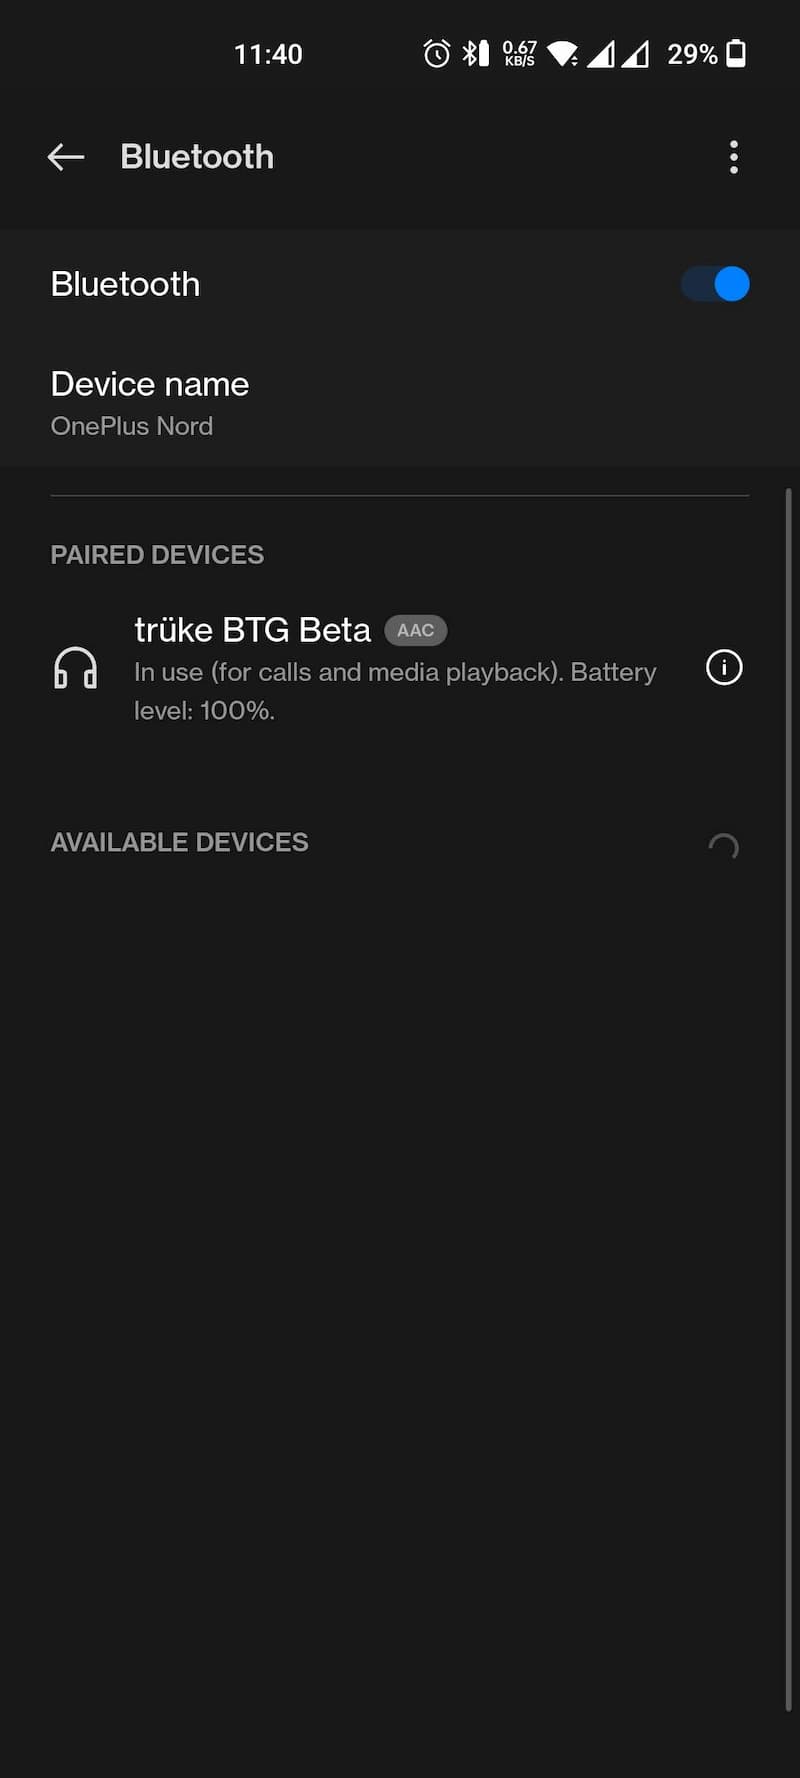 Truke BTG Beta Battery Level Check